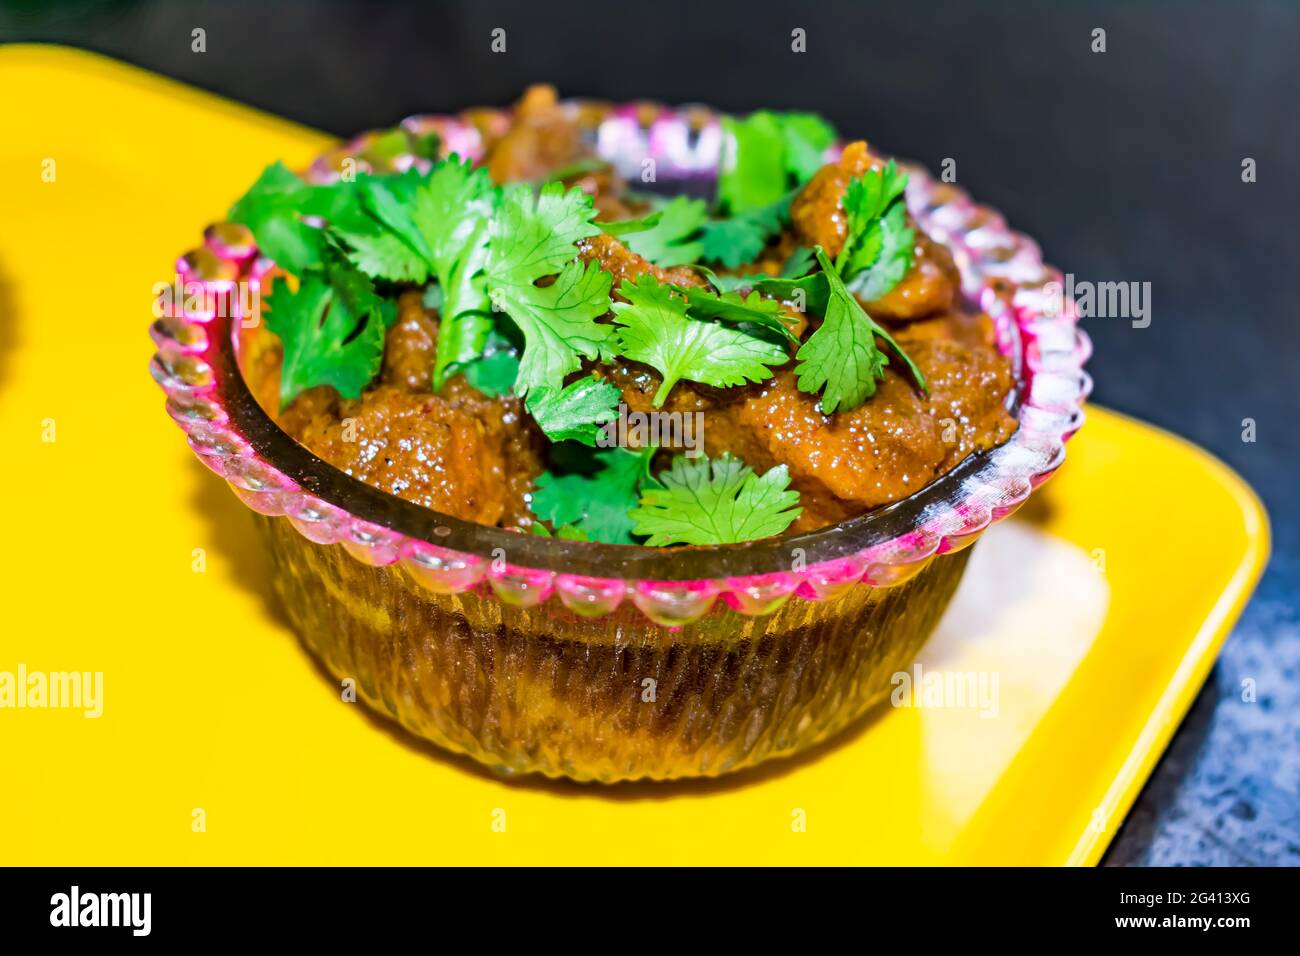 pollo masala picante hecho en casa en estilo indio vista cercana que parece impresionante en sartén. Foto de stock